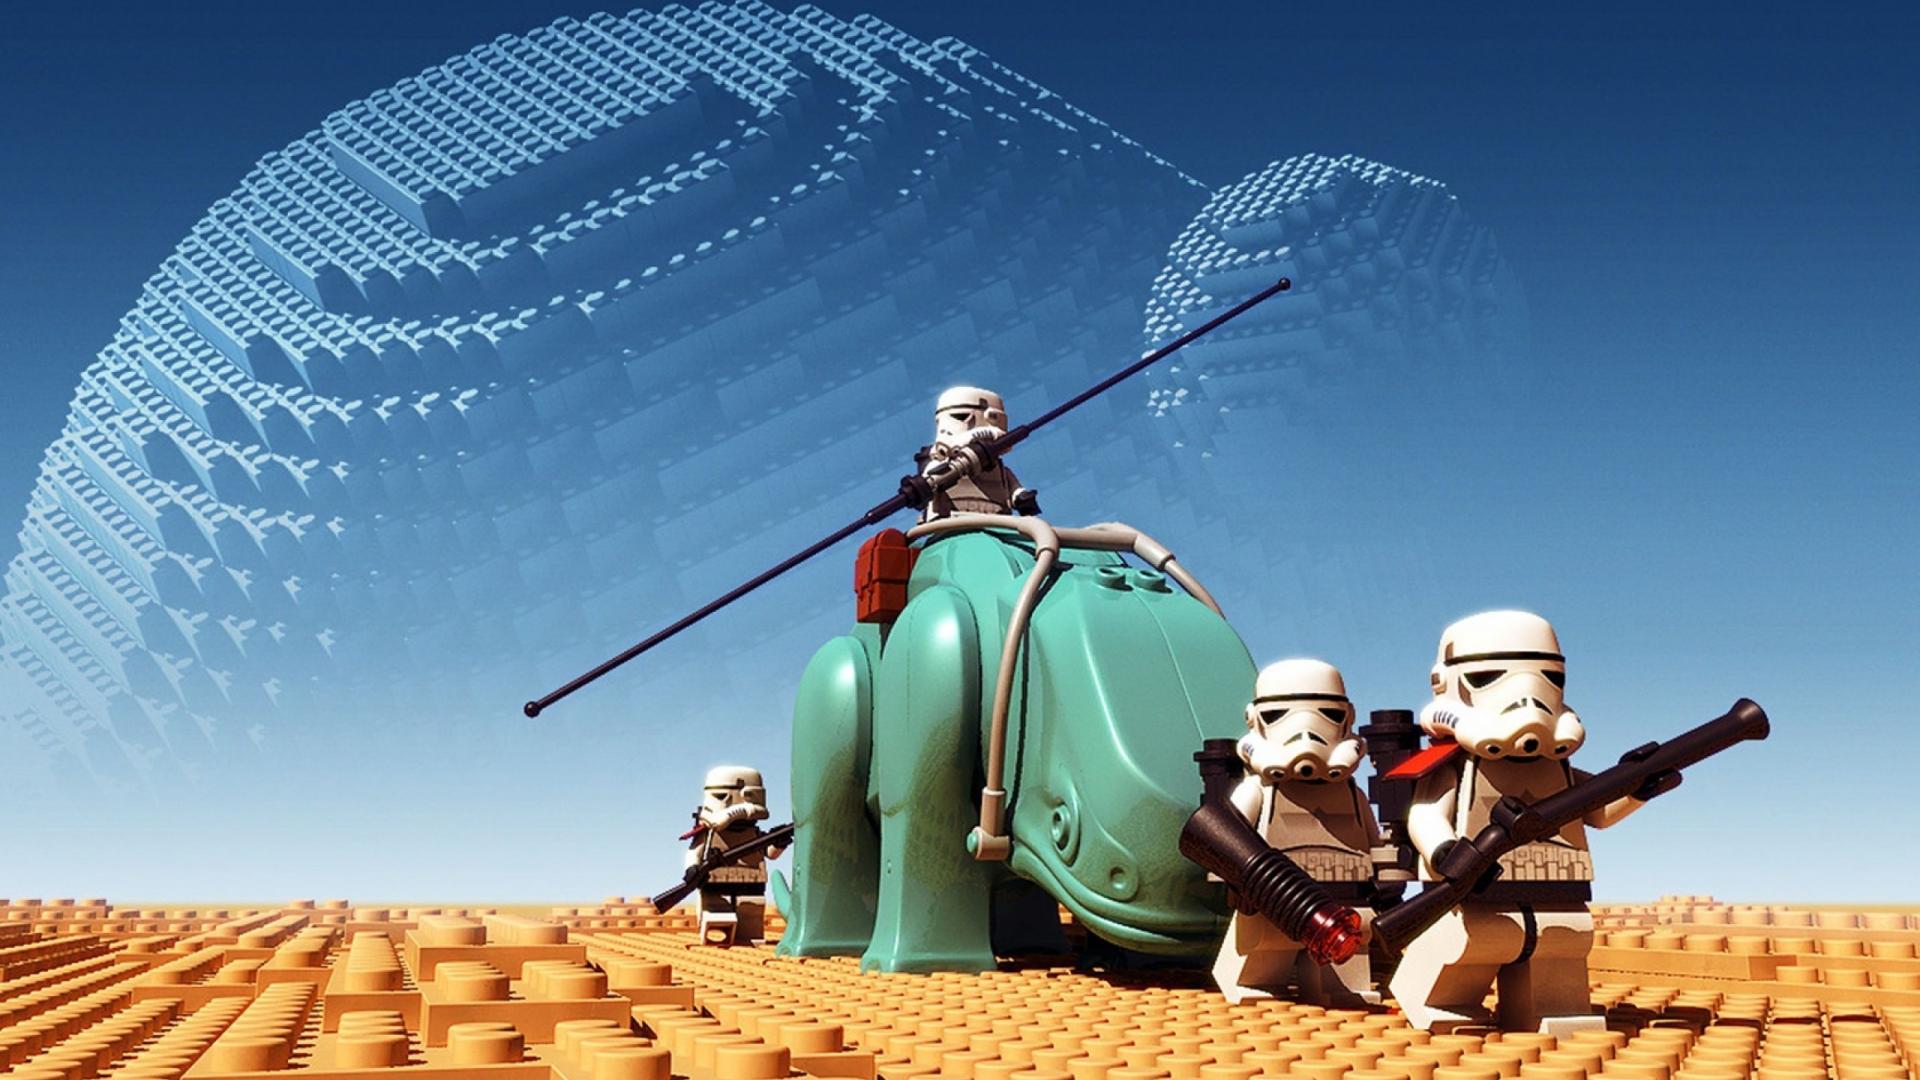 Star Wars Lego Wallpaper Hd - HD Wallpaper 